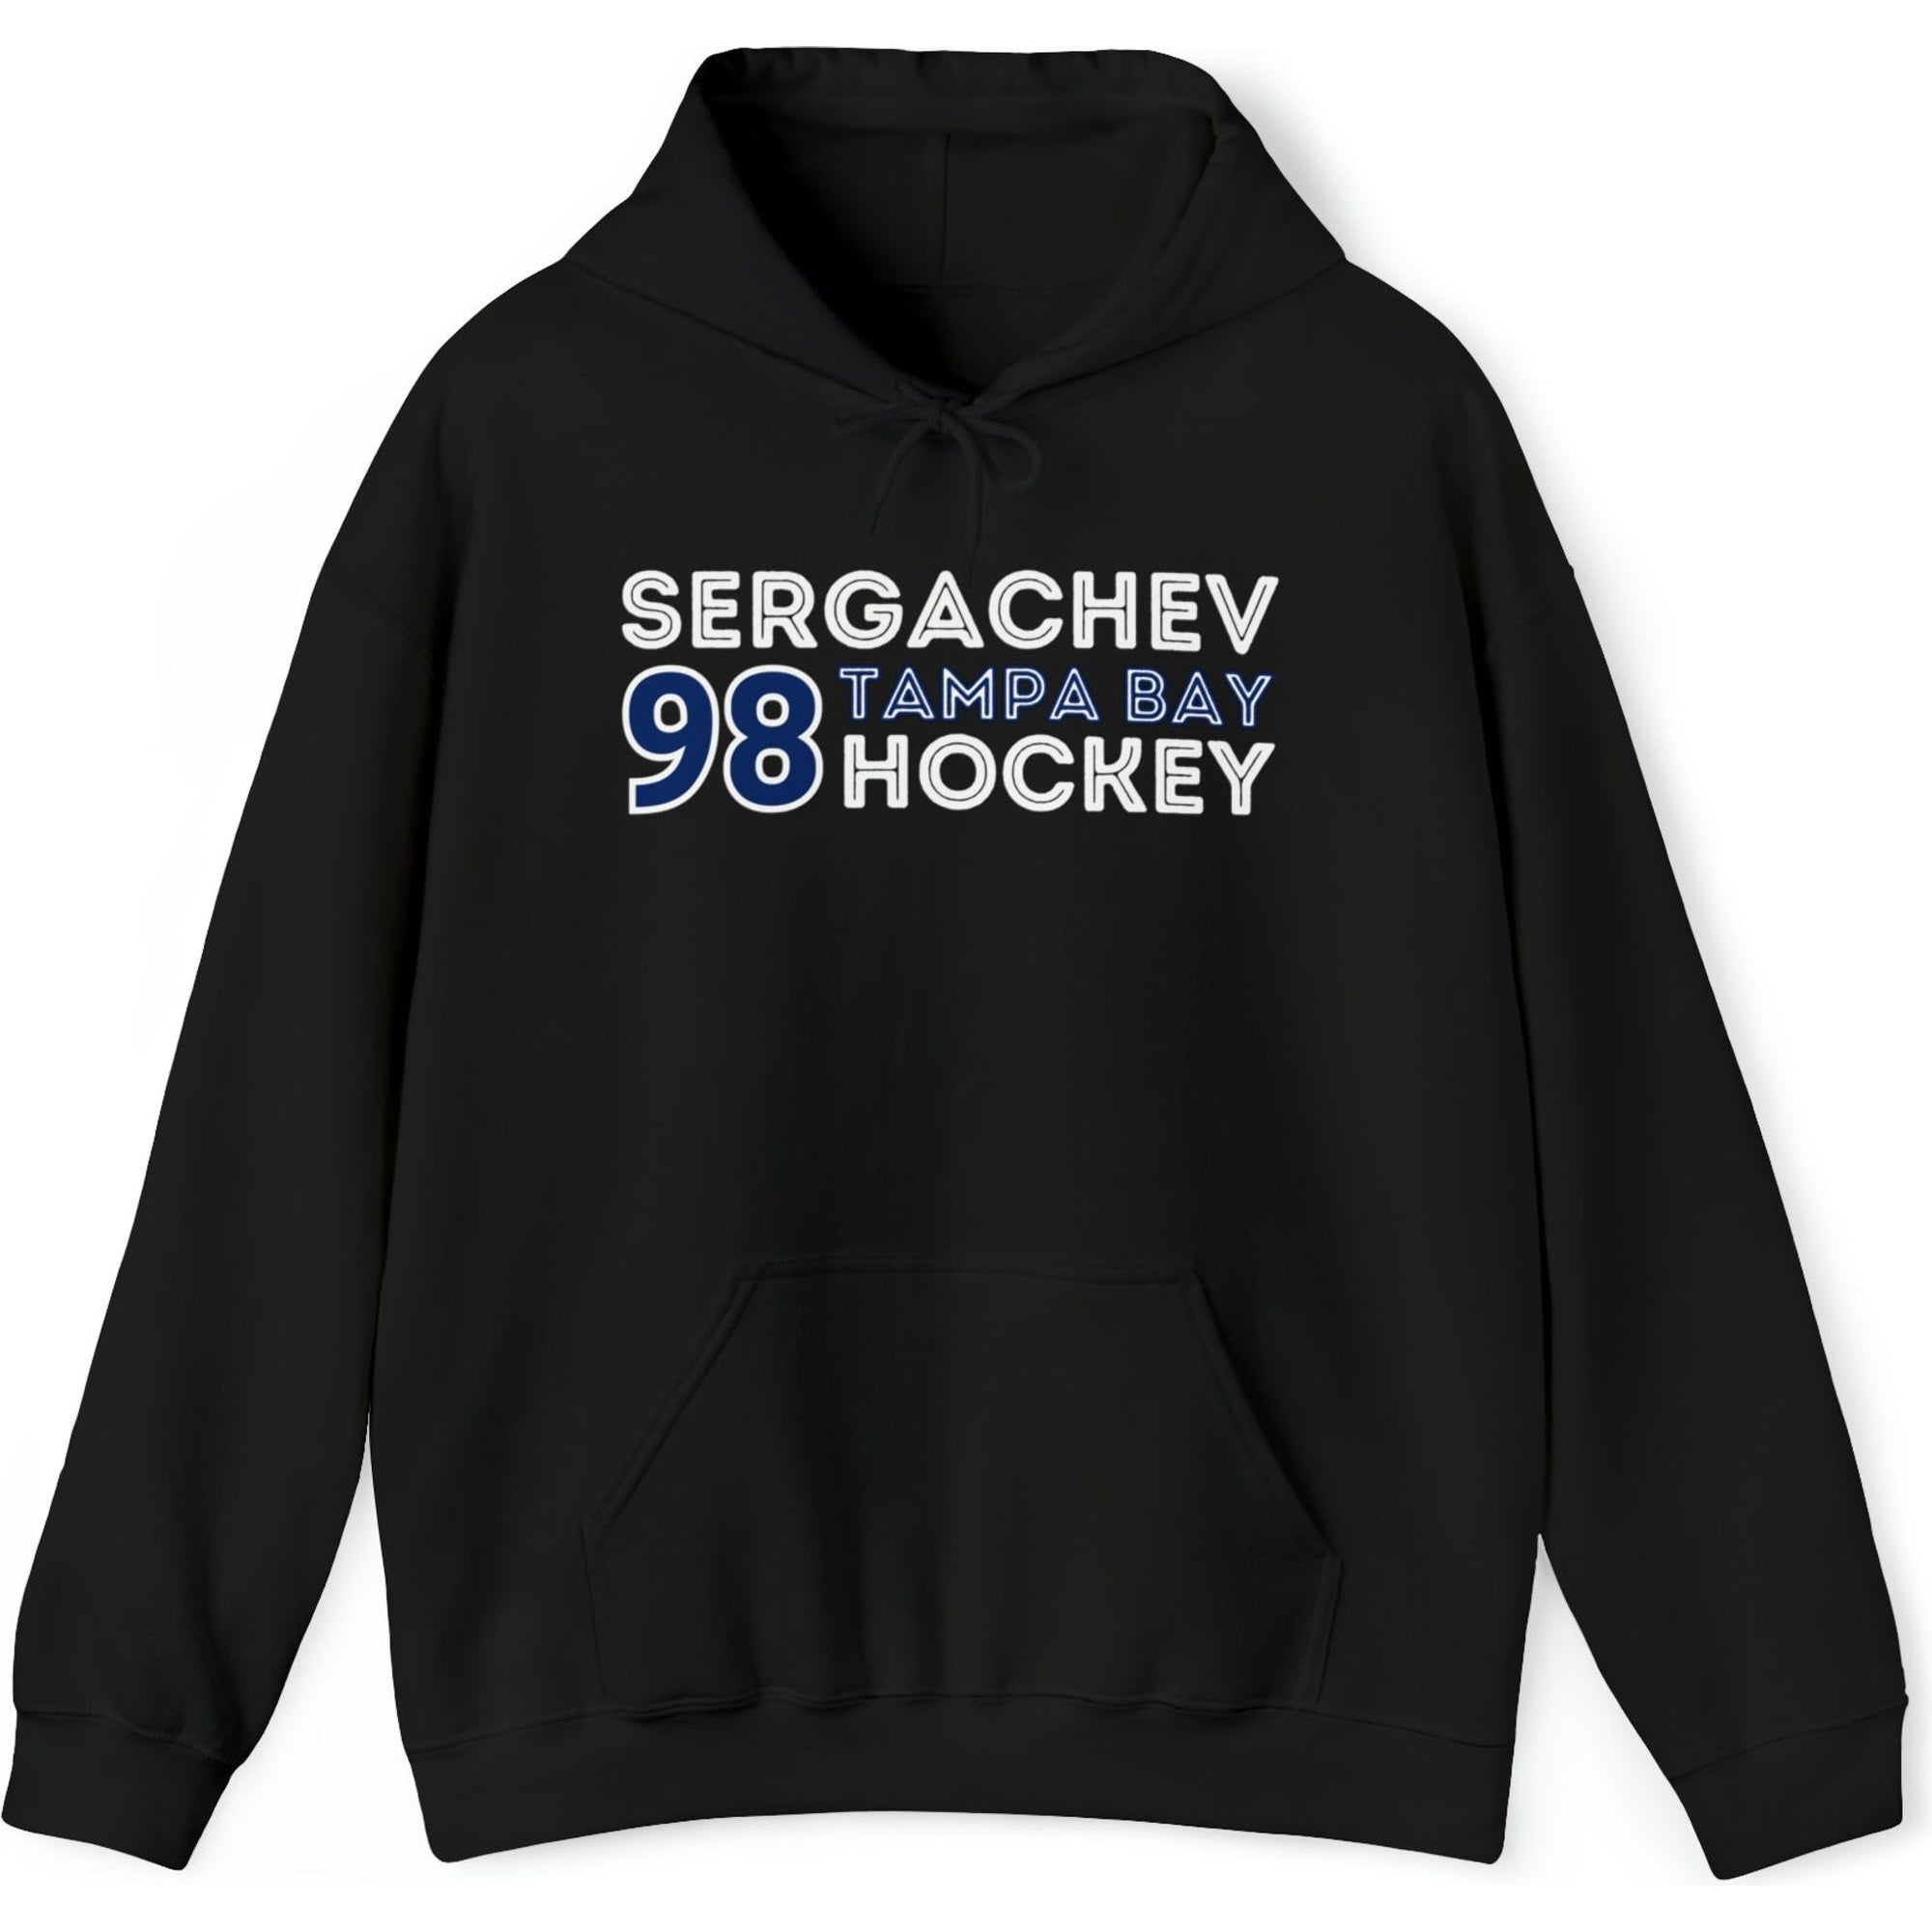 Sergachev 98 Tampa Bay Hockey Grafitti Wall Design Unisex Hooded Sweatshirt